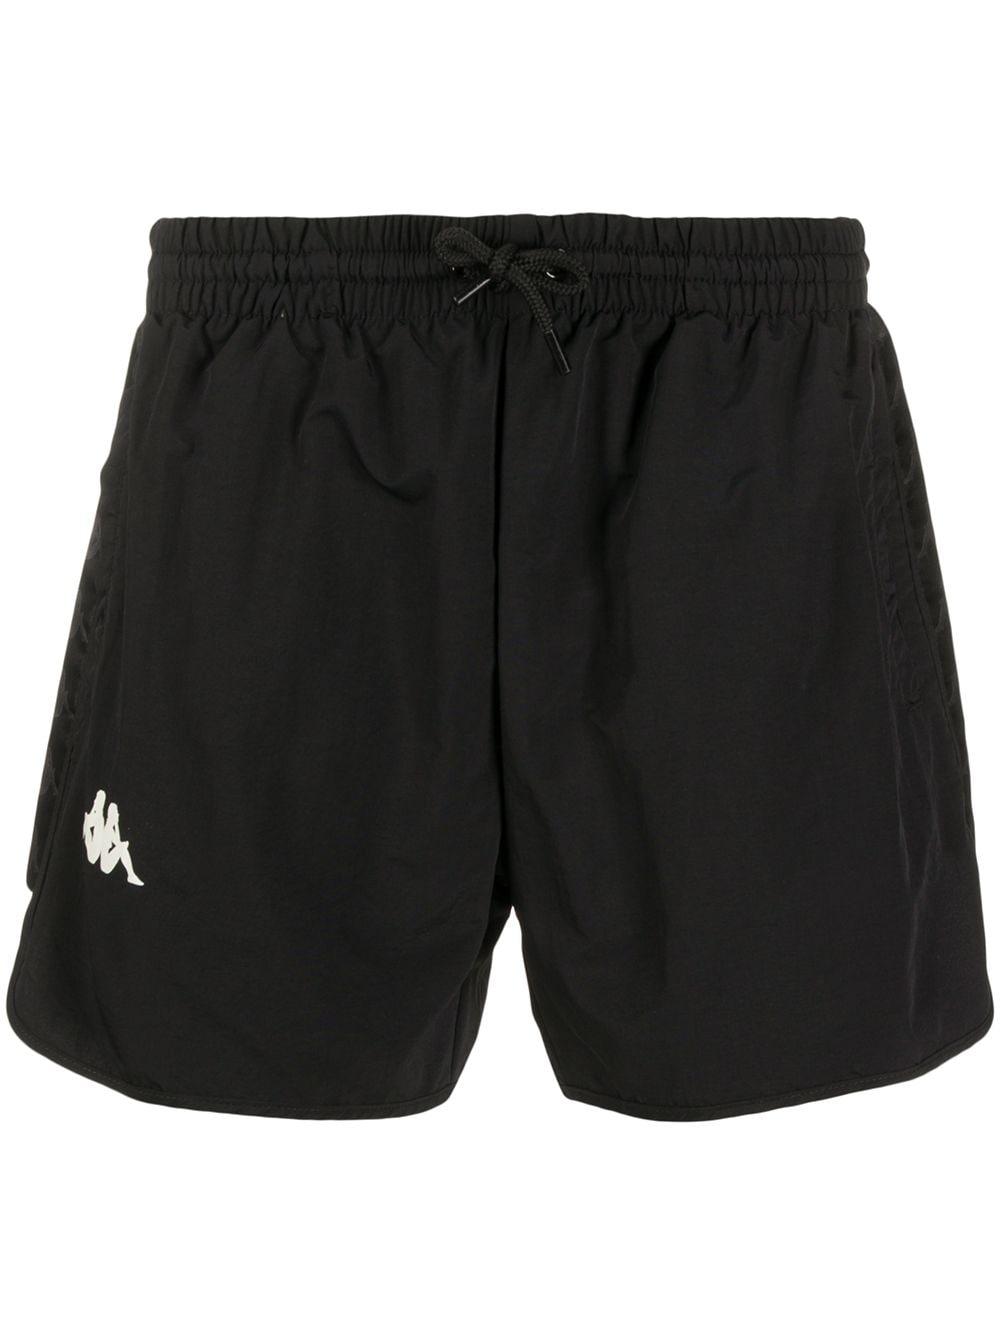 Kappa Logo Swim Shorts in Black for Men - Lyst